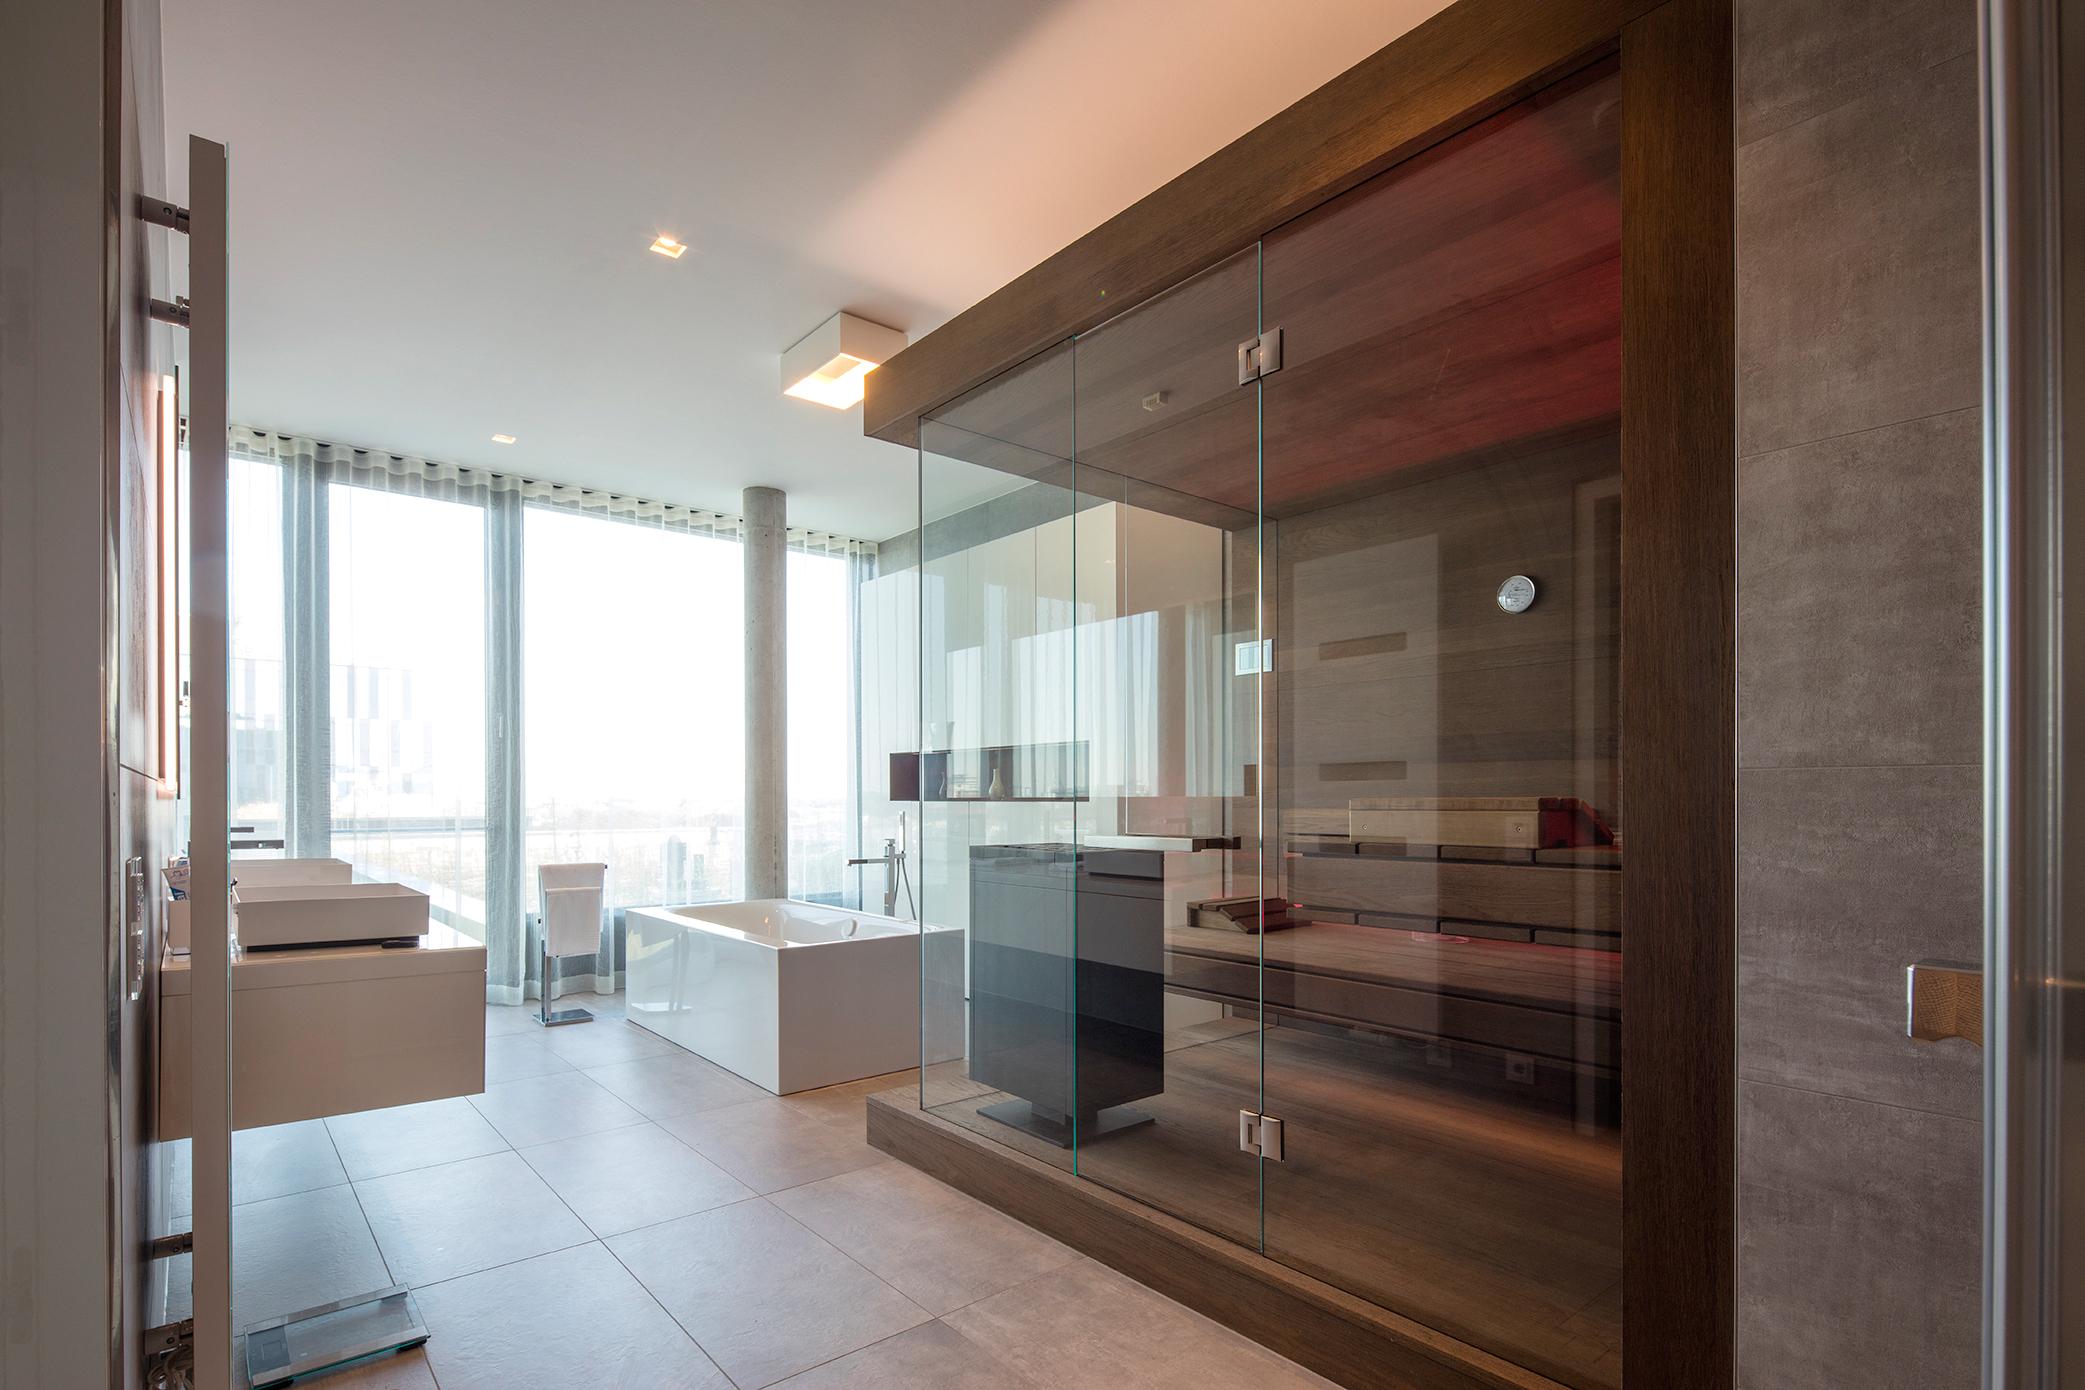 Designsauna mit viel Glas als Design-Möbelstück #sauna #badsauna ©corso sauna manufaktur